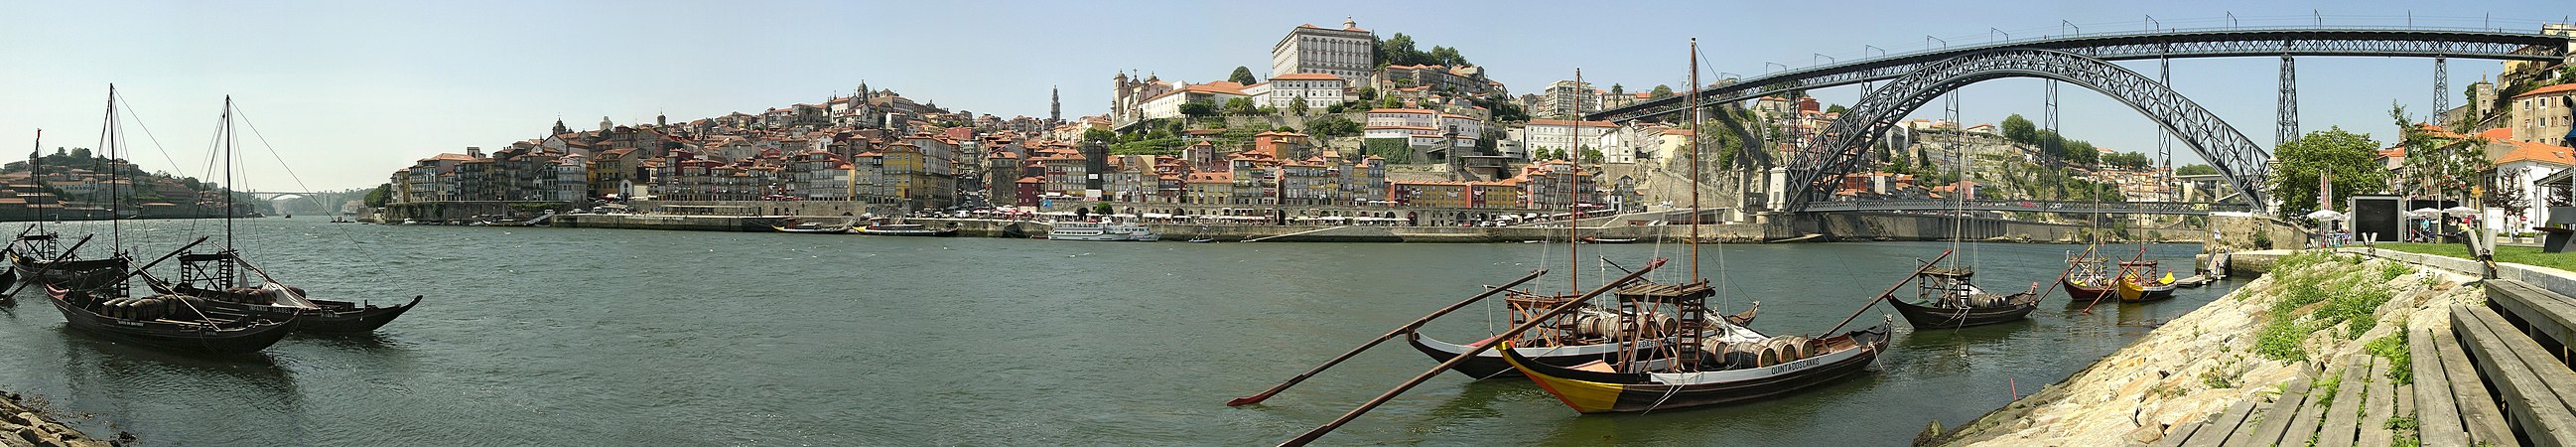 Porto, by Olegivvit, (edited by Diliff)